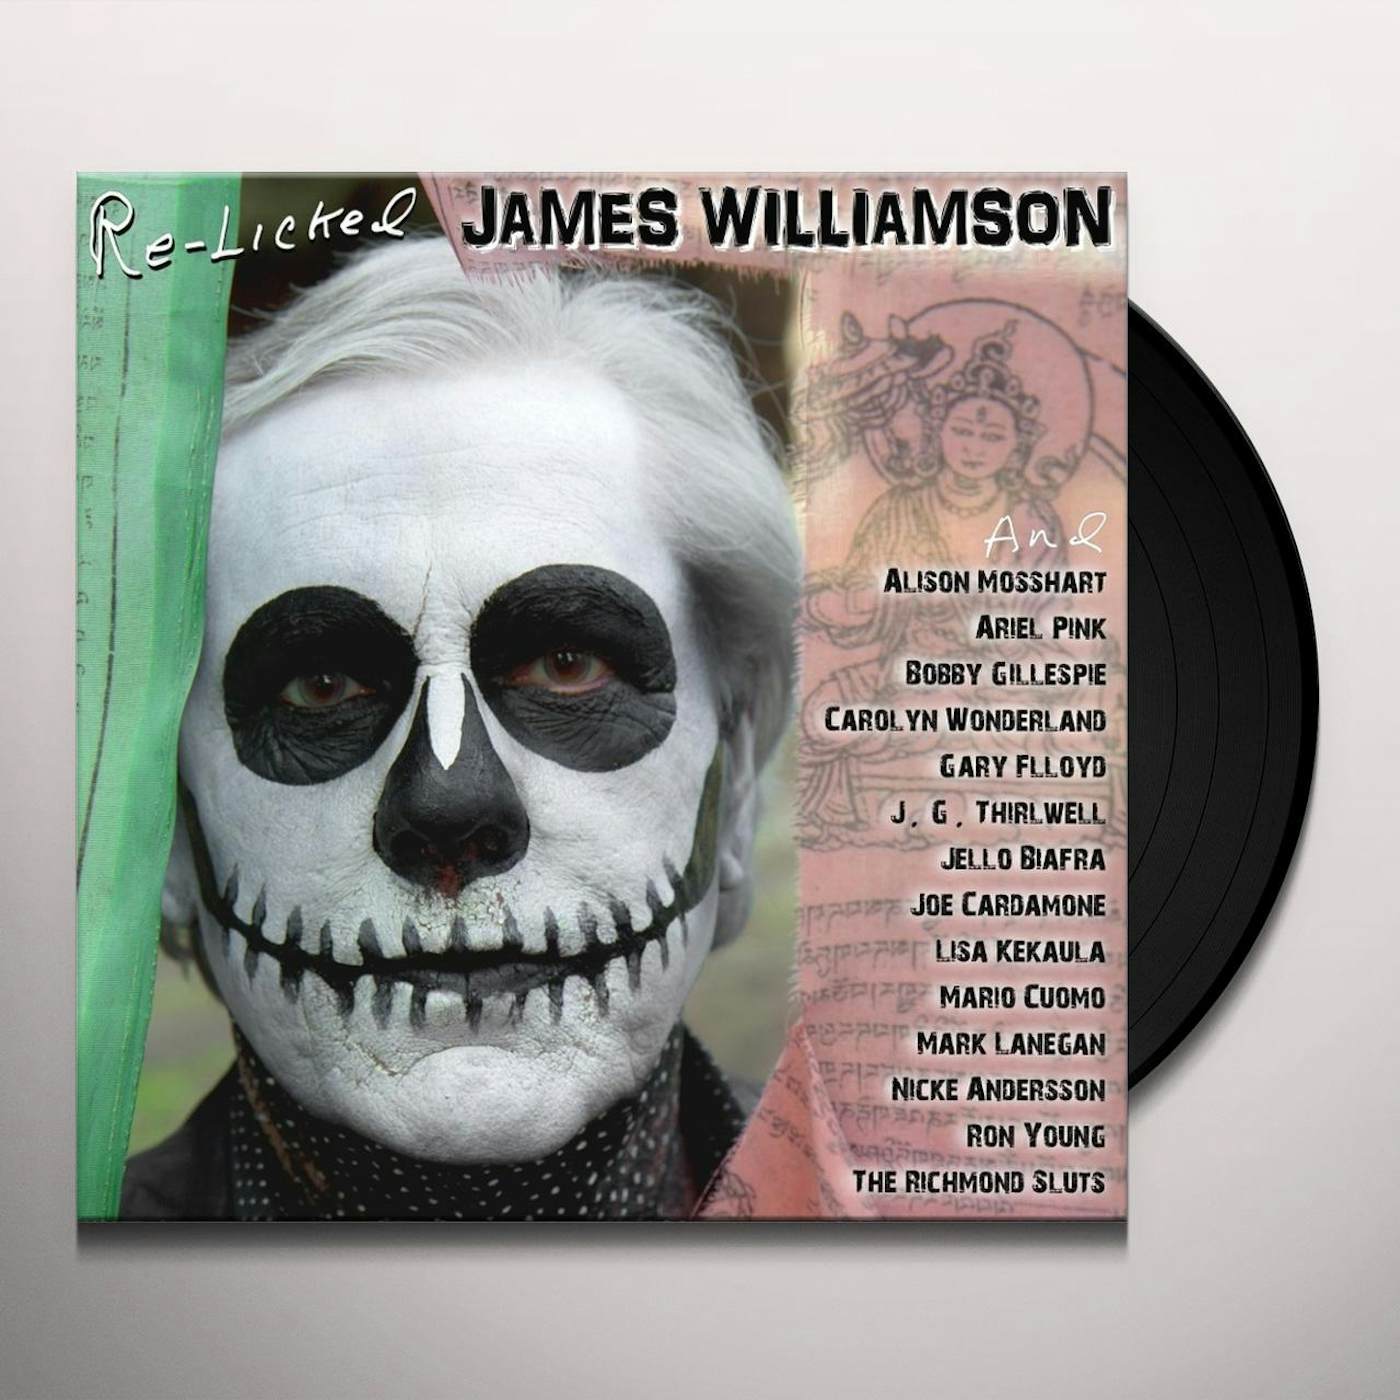 James Williamson Re-Licked Vinyl Record